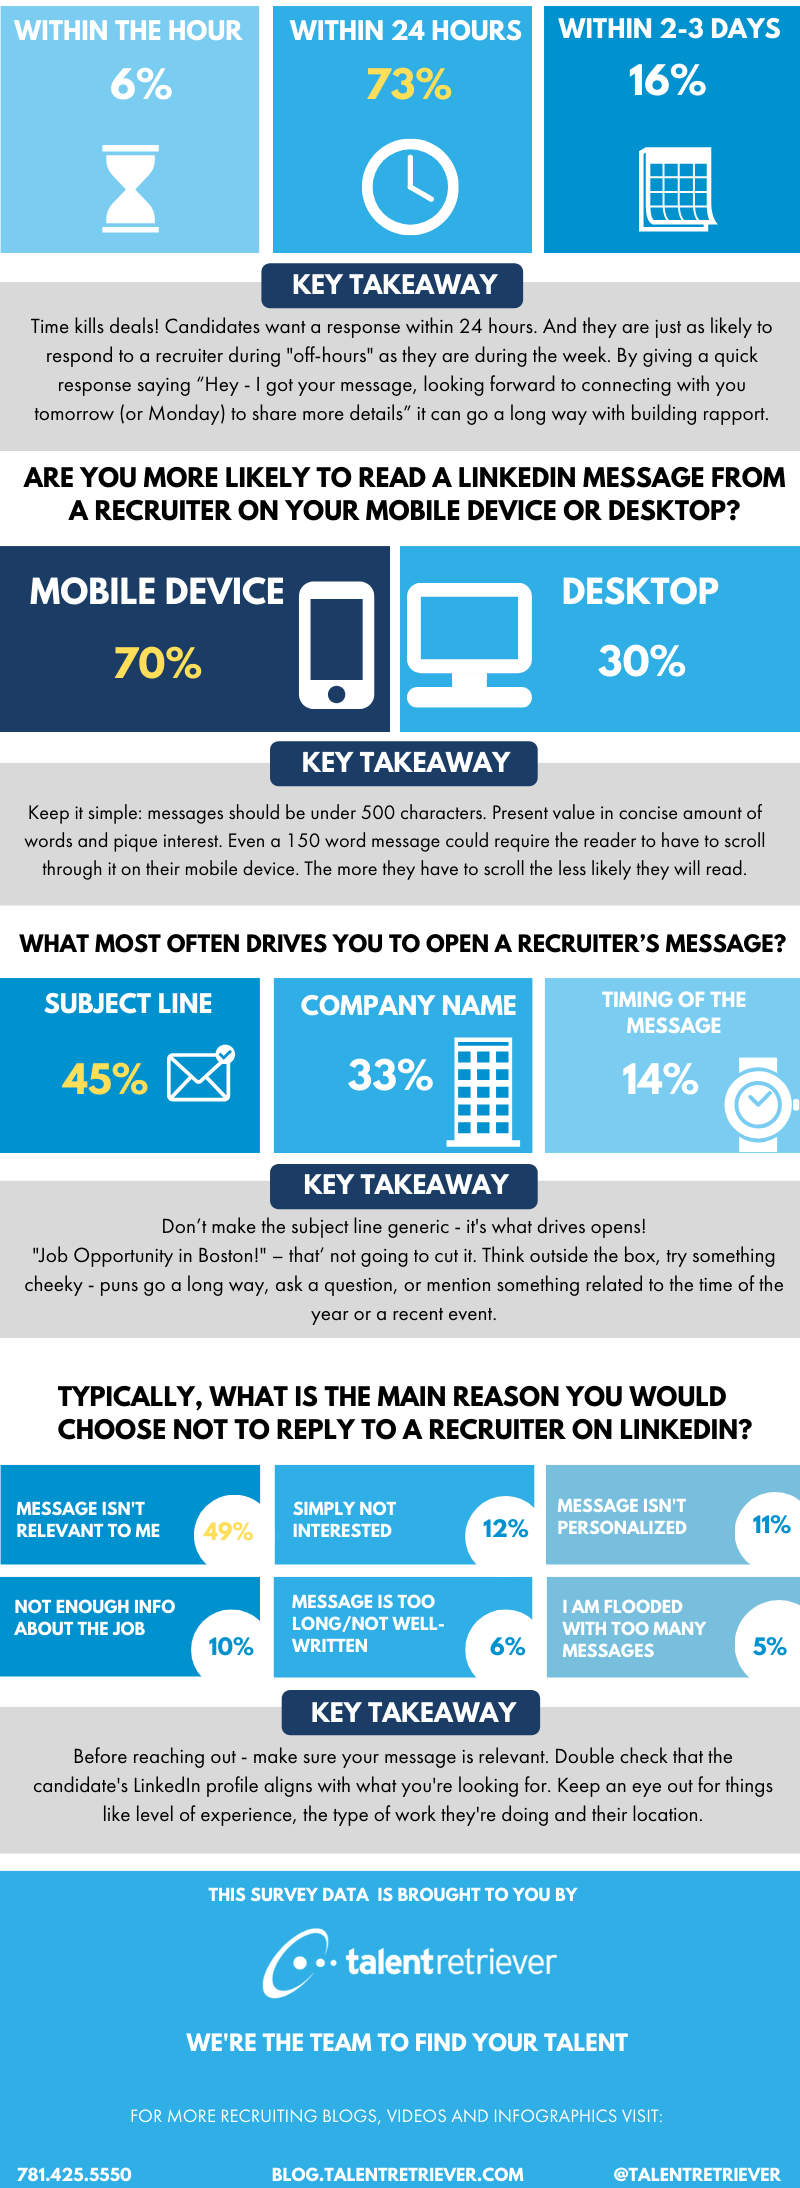 LinkedIn Recruiter Messaging: Best Practices (Survey Results)